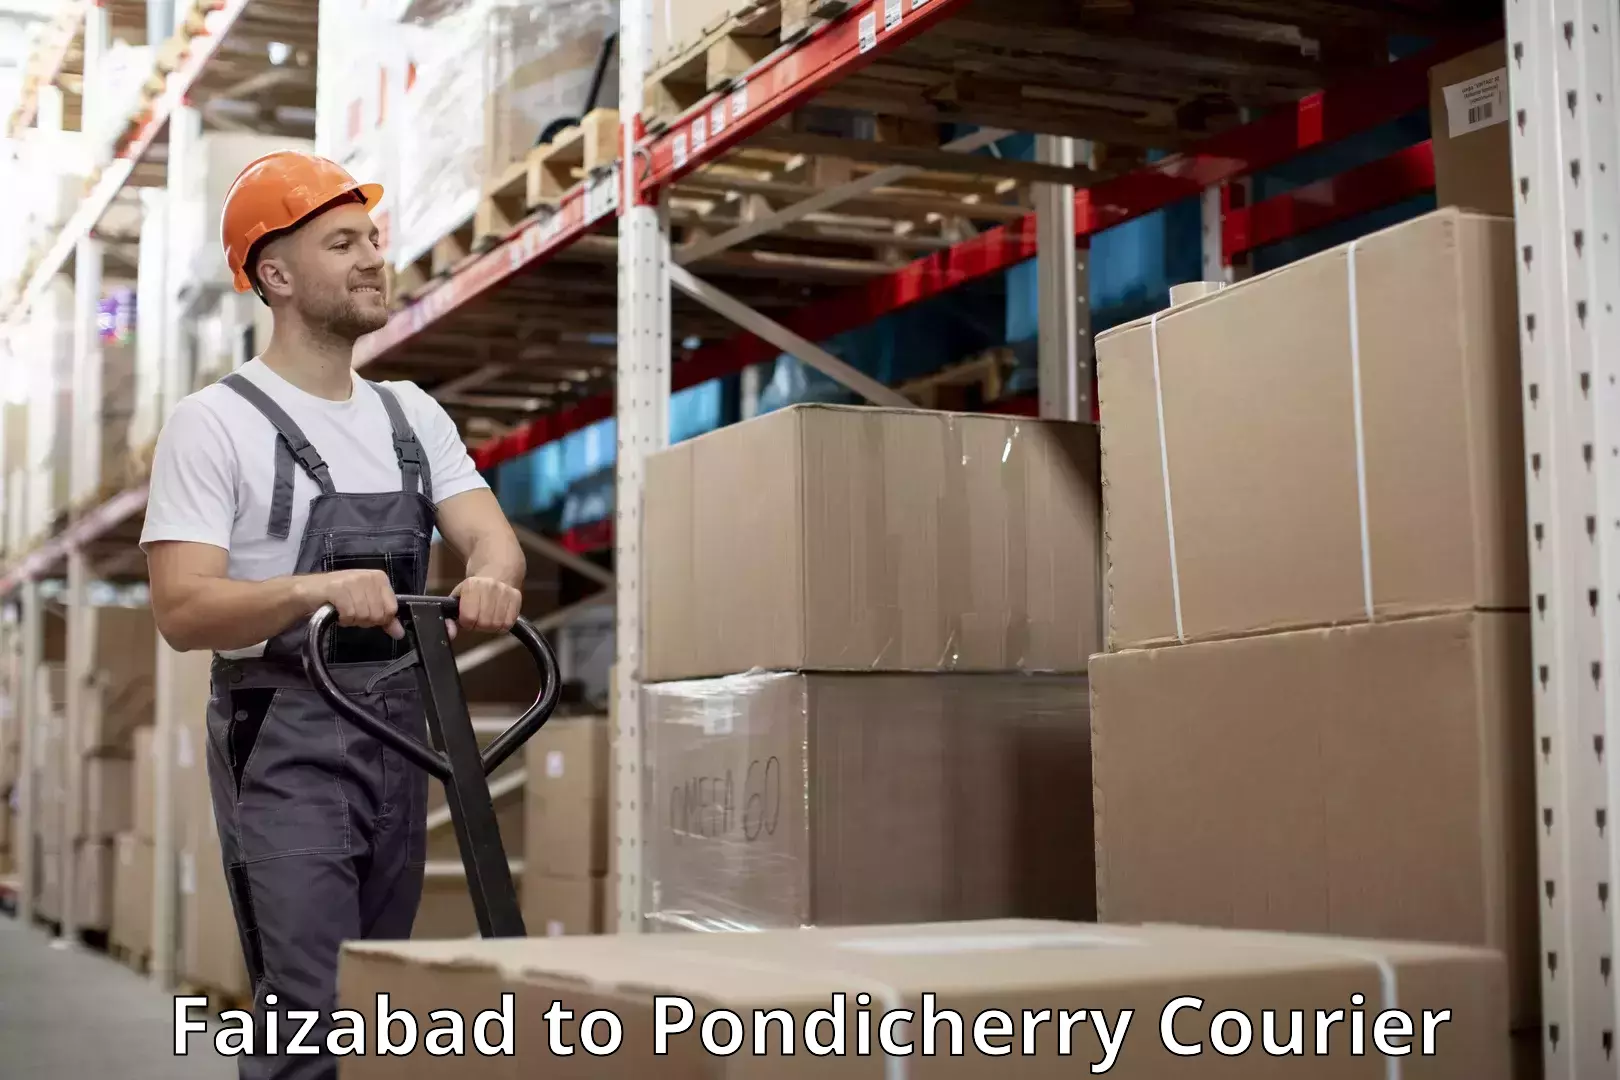 Luggage shipment specialists Faizabad to Pondicherry